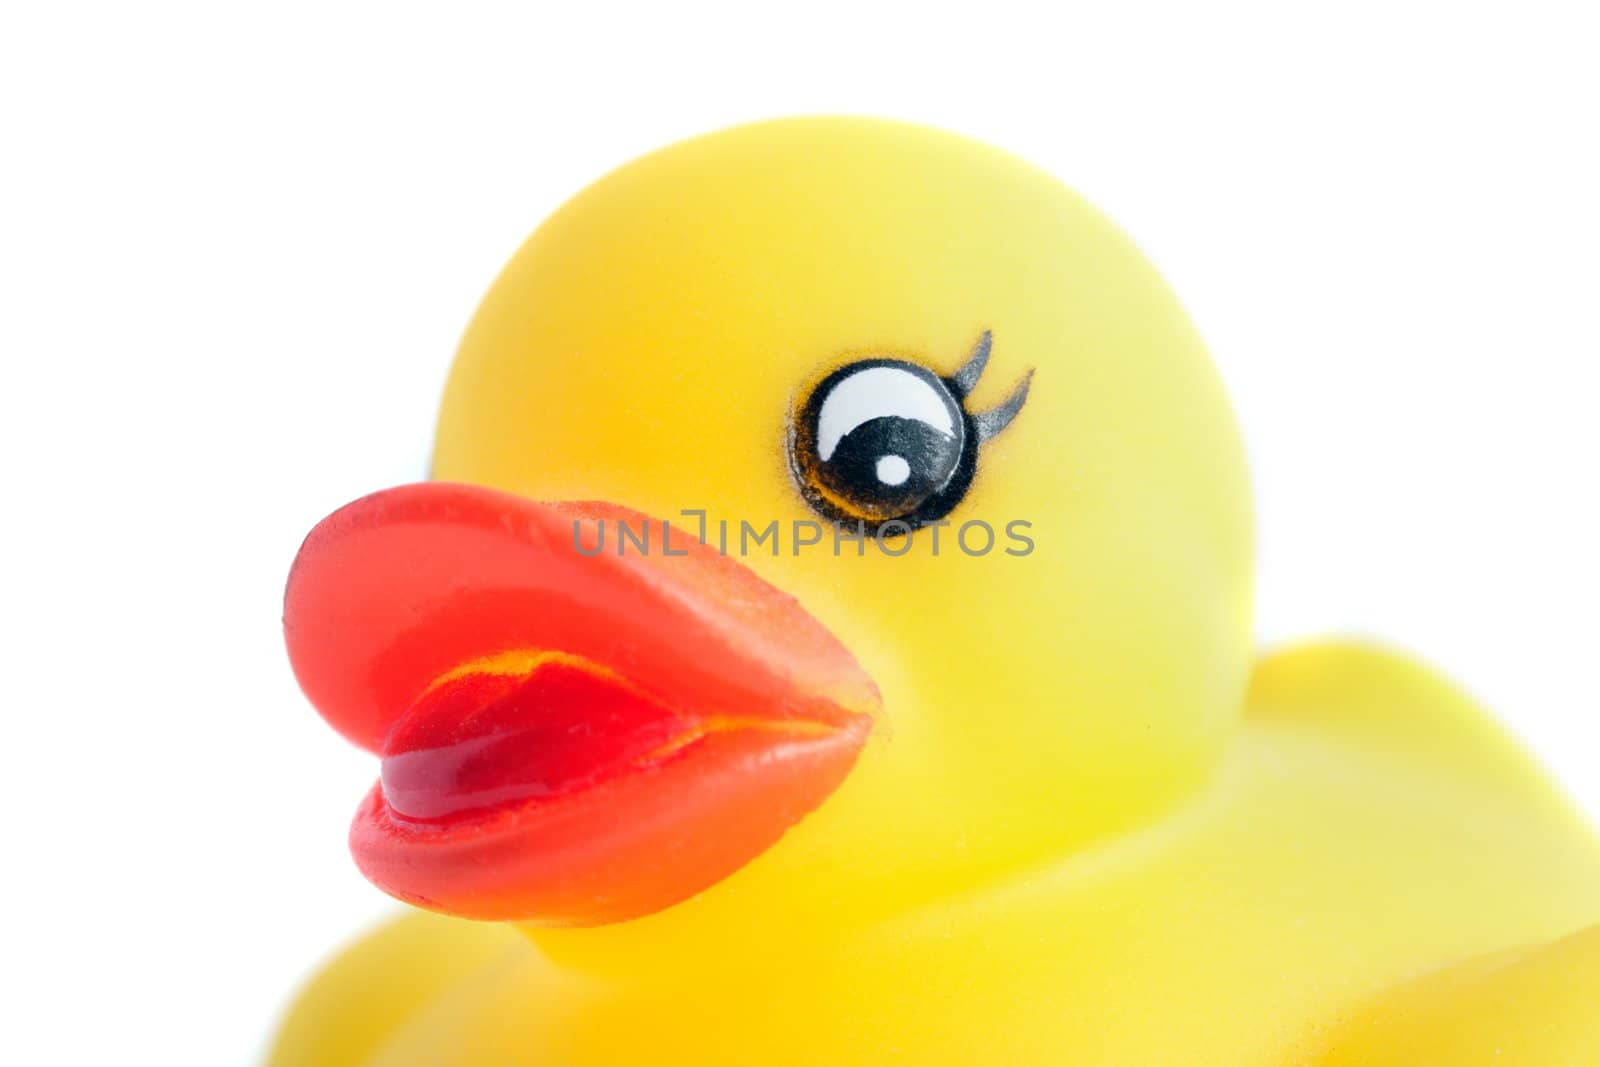 Rubber duck by kaarsten